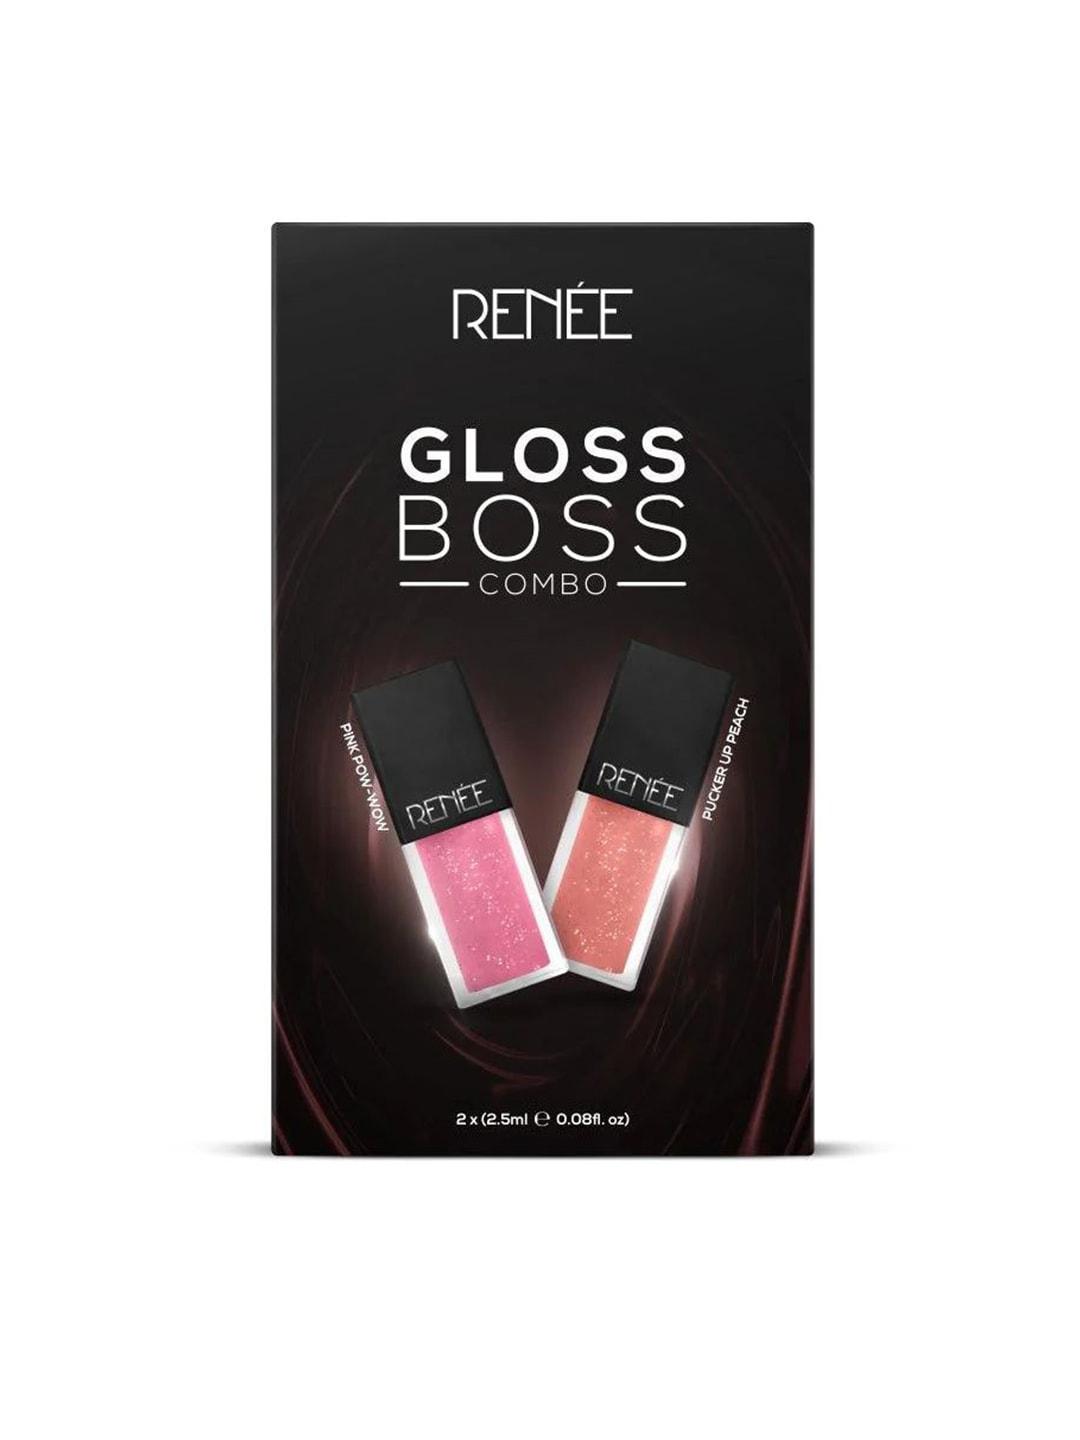 renee see me shine lip gloss - gloss boss combo 2.5ml each